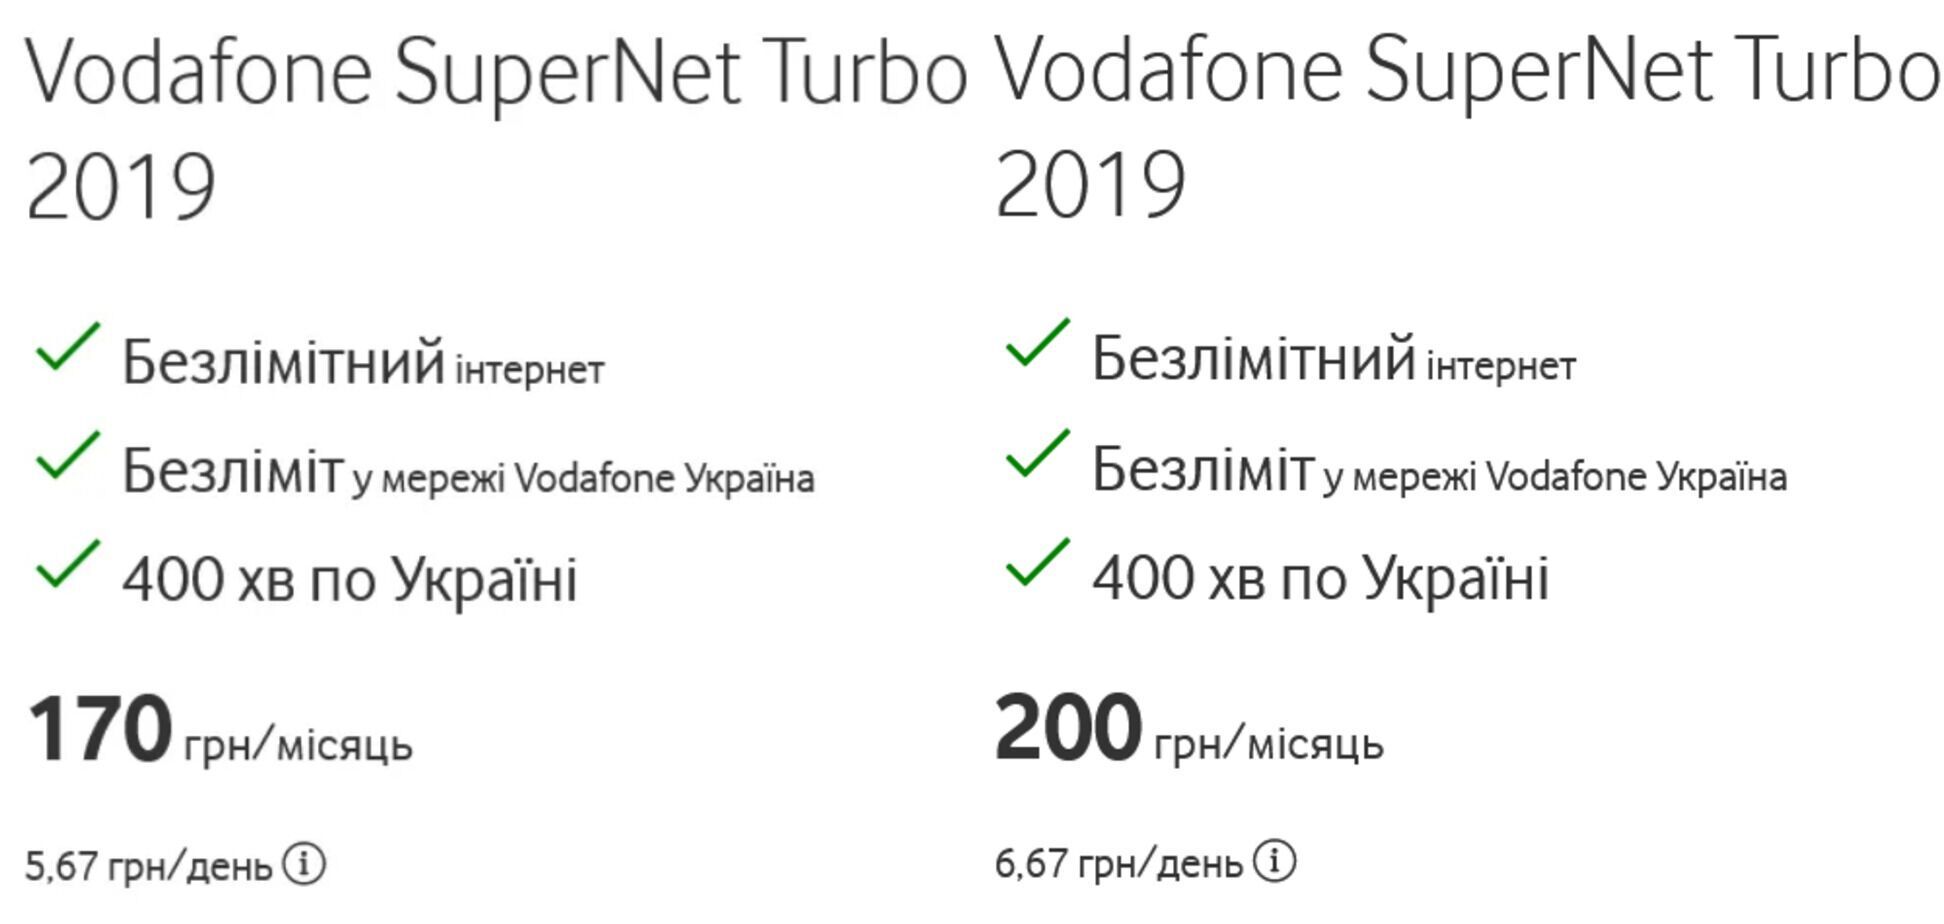 Тариф SuperNet Turbo 2019 подорожал на 30 грн/месяц